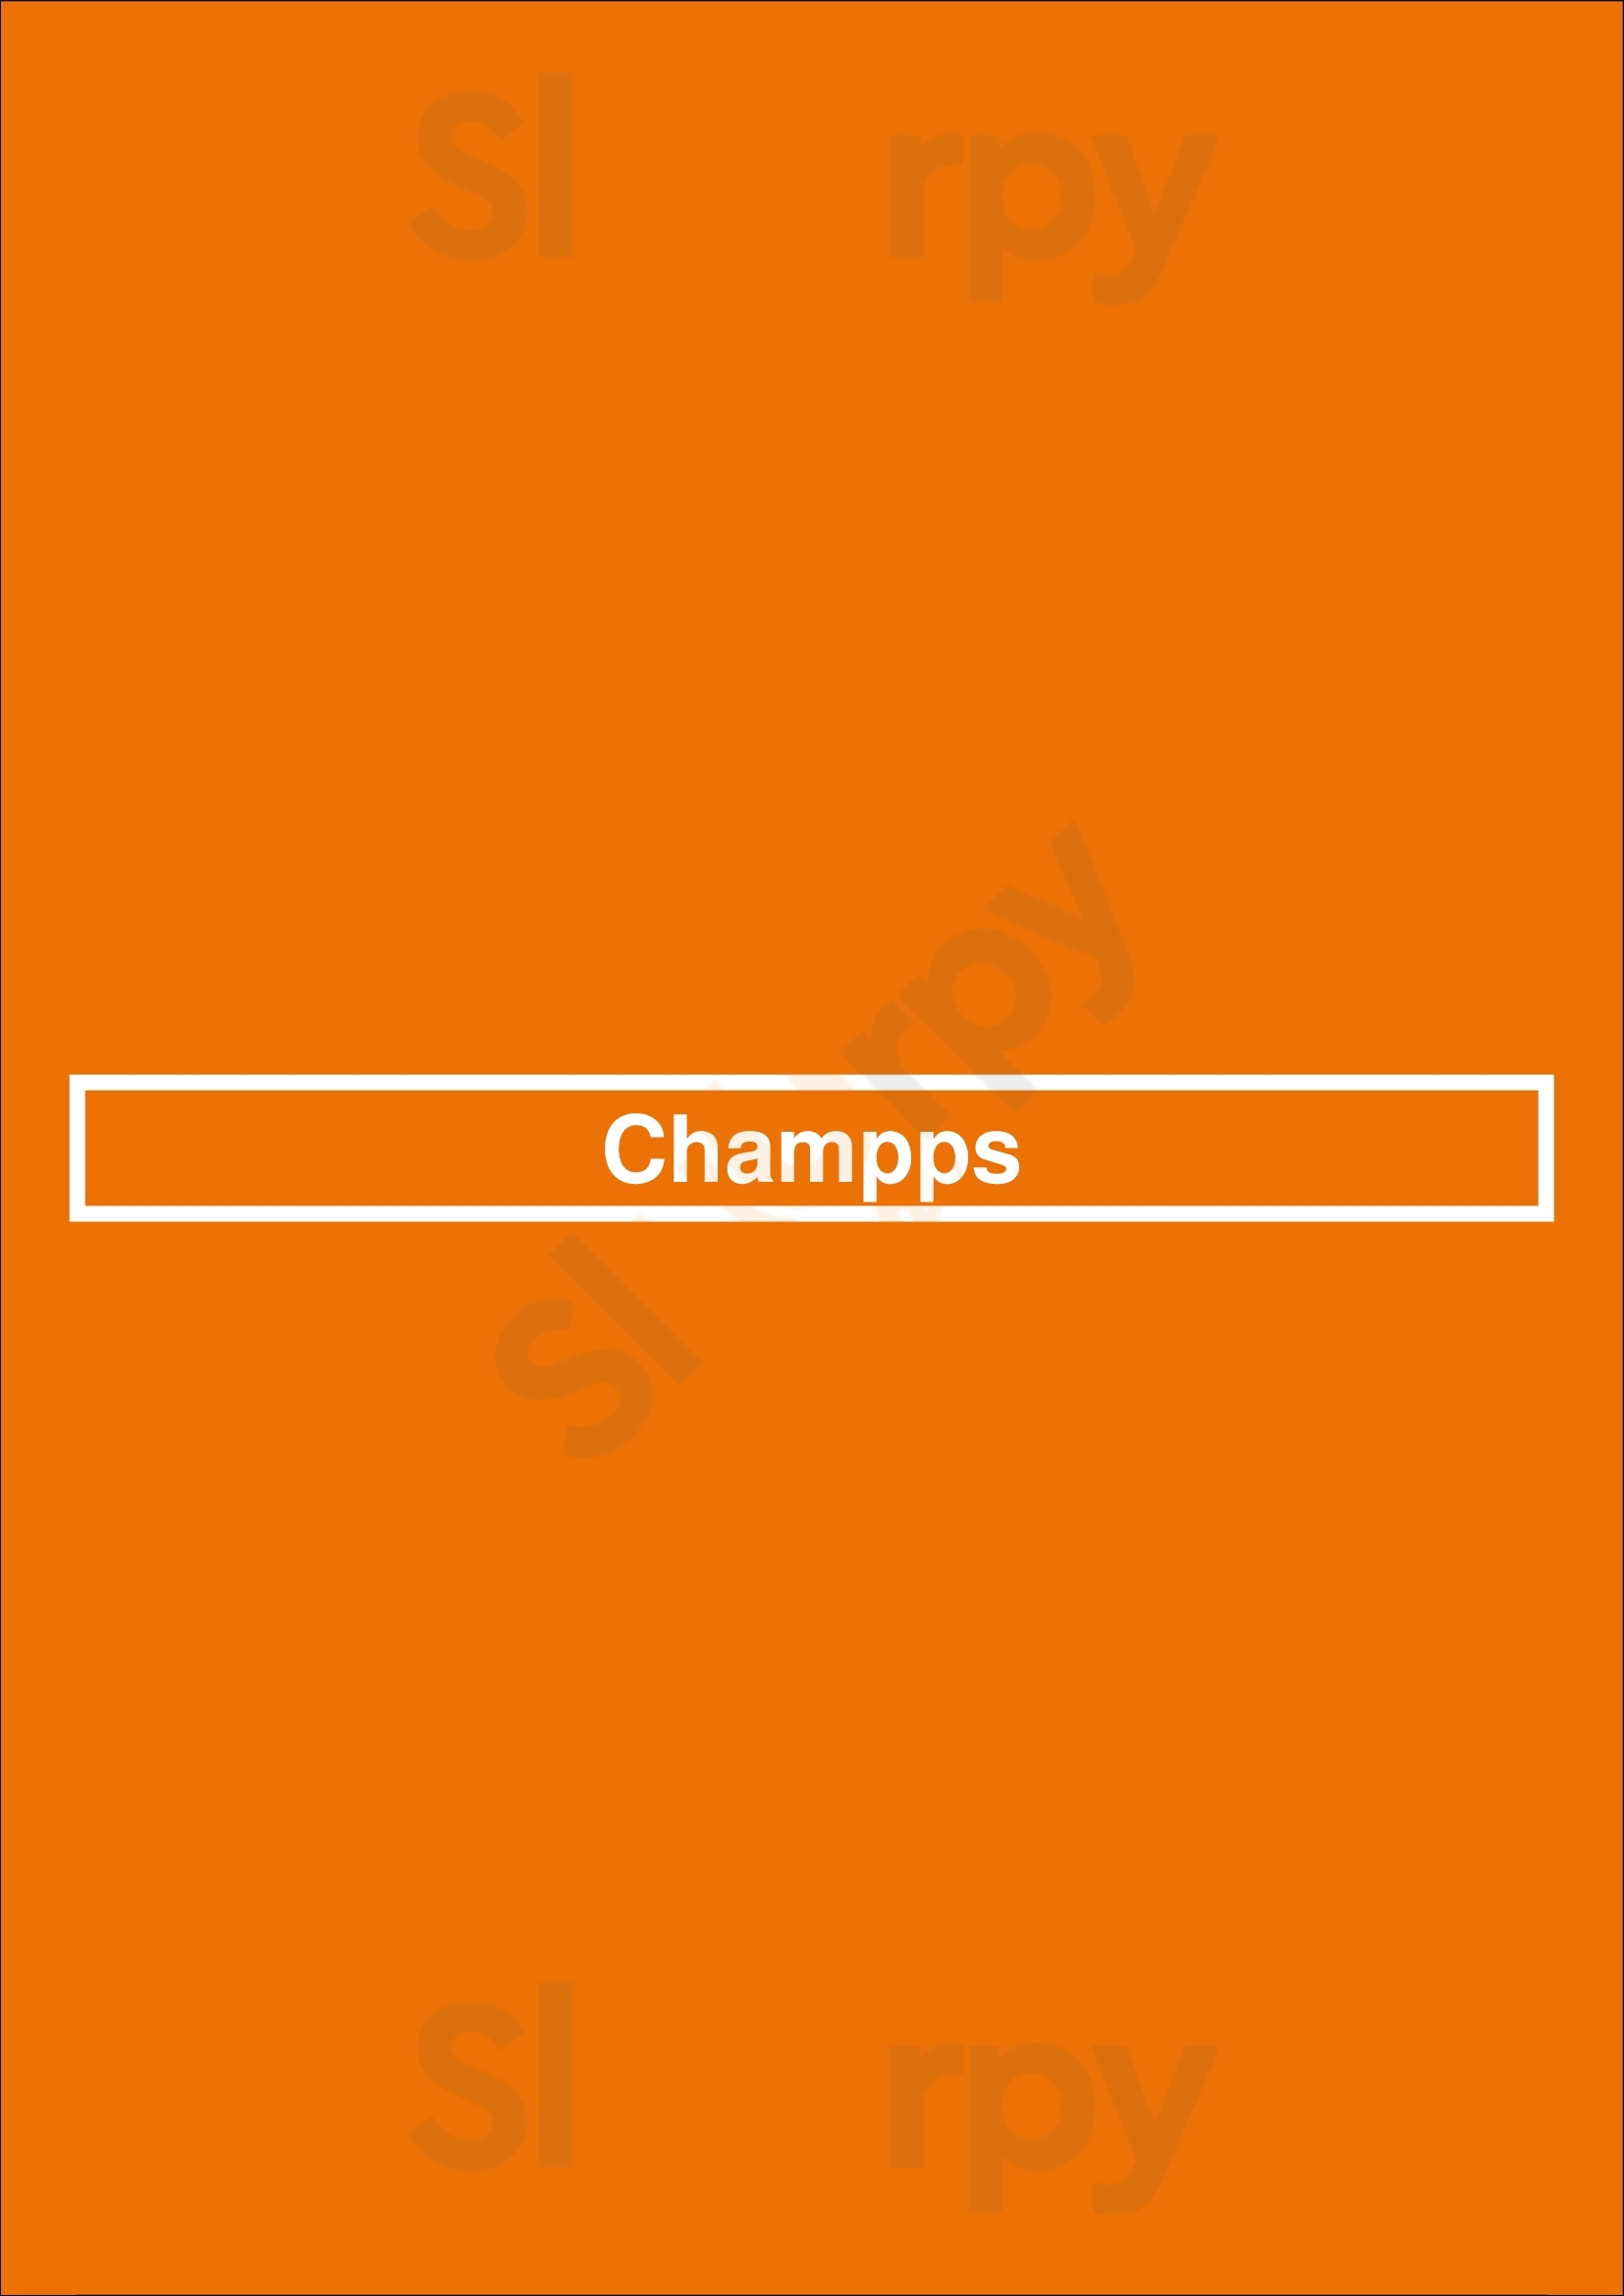 Champps Columbus Menu - 1